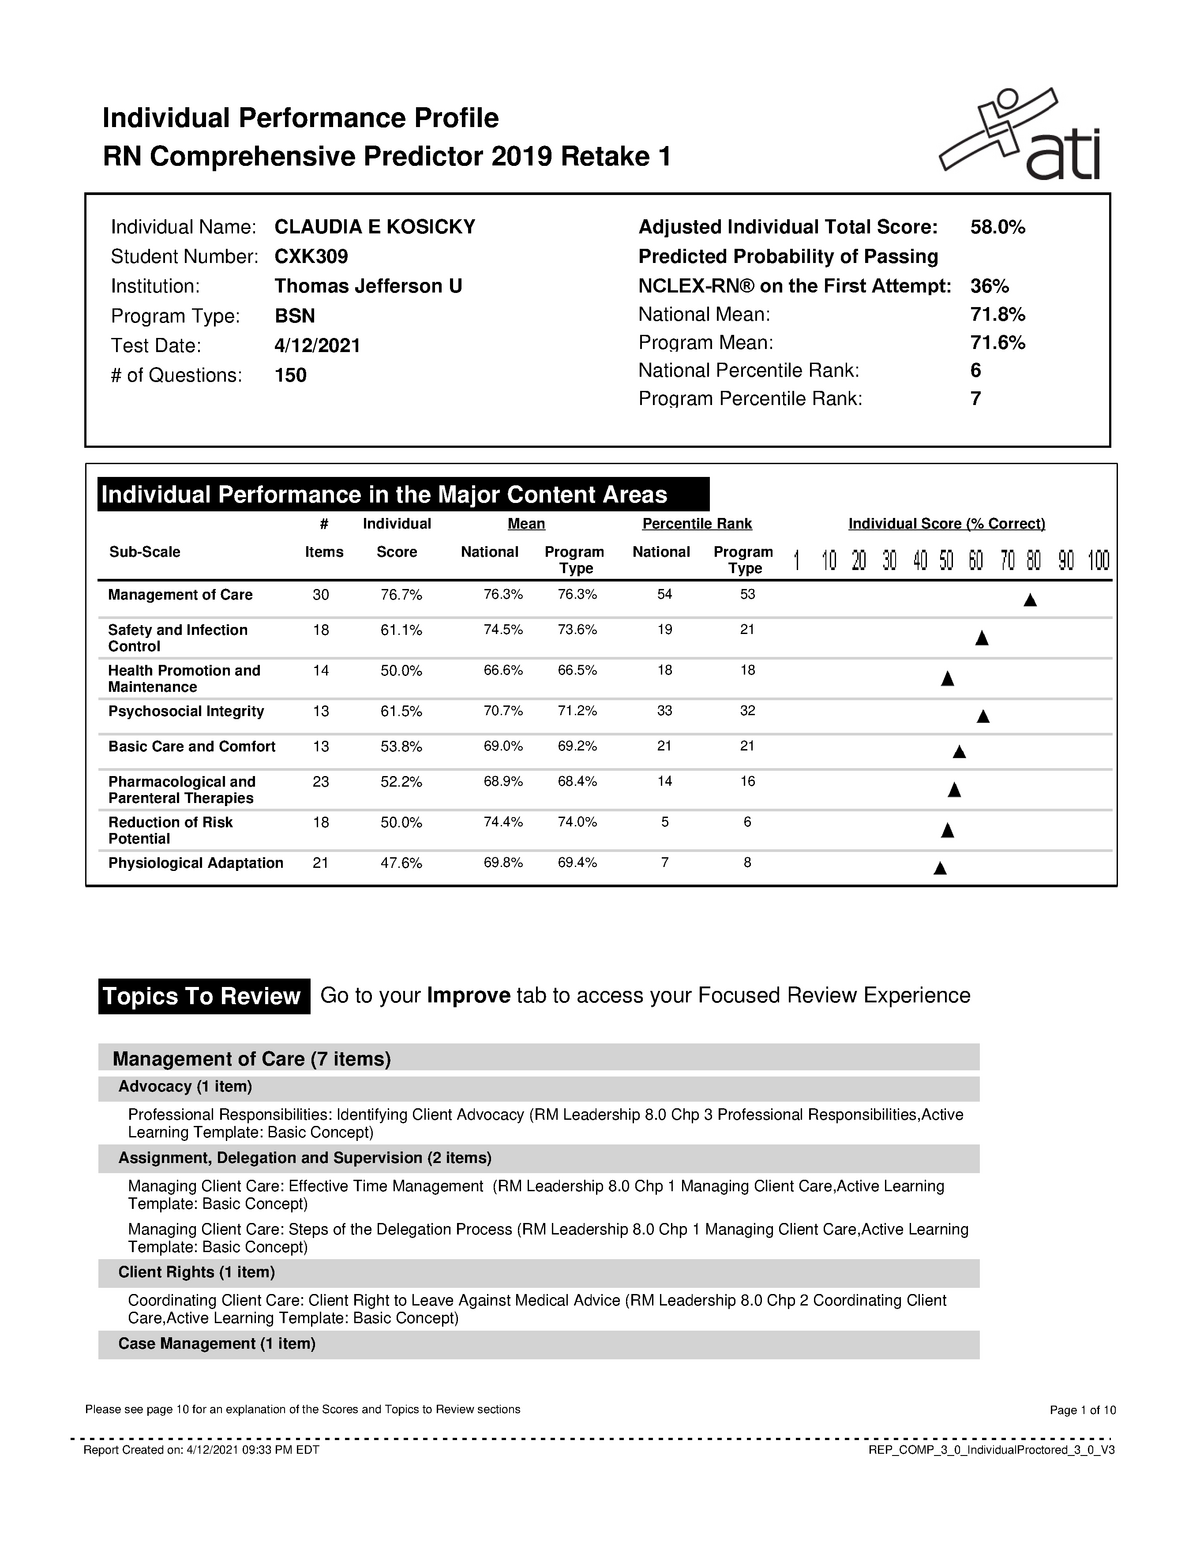 report-48-ati-report-individual-performance-profile-rn